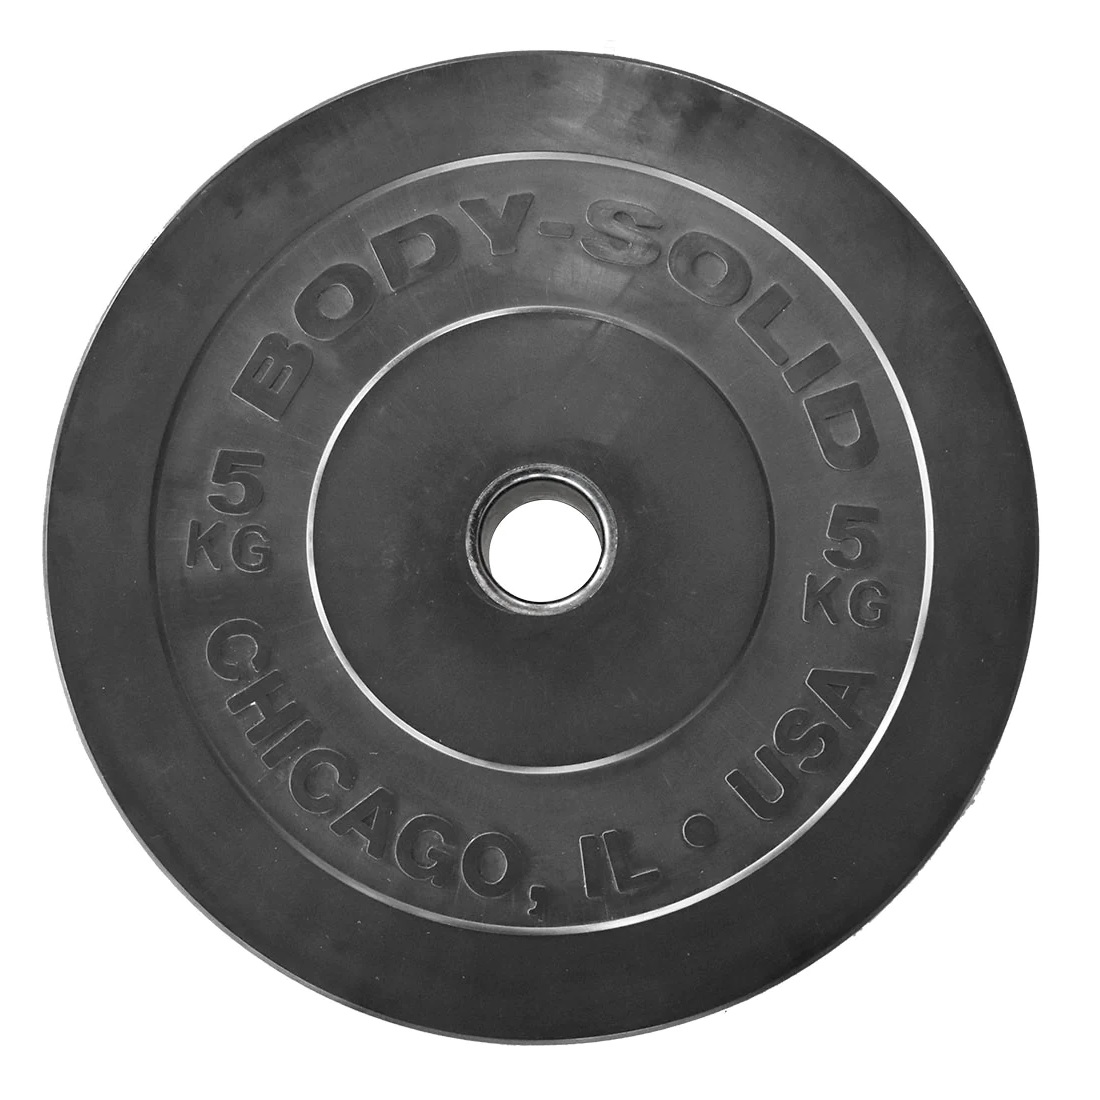  Disque Olympique - Diamètre 51mm Chicago Olympic Bumper Plate 5 kg Bodysolid - FitnessBoutique